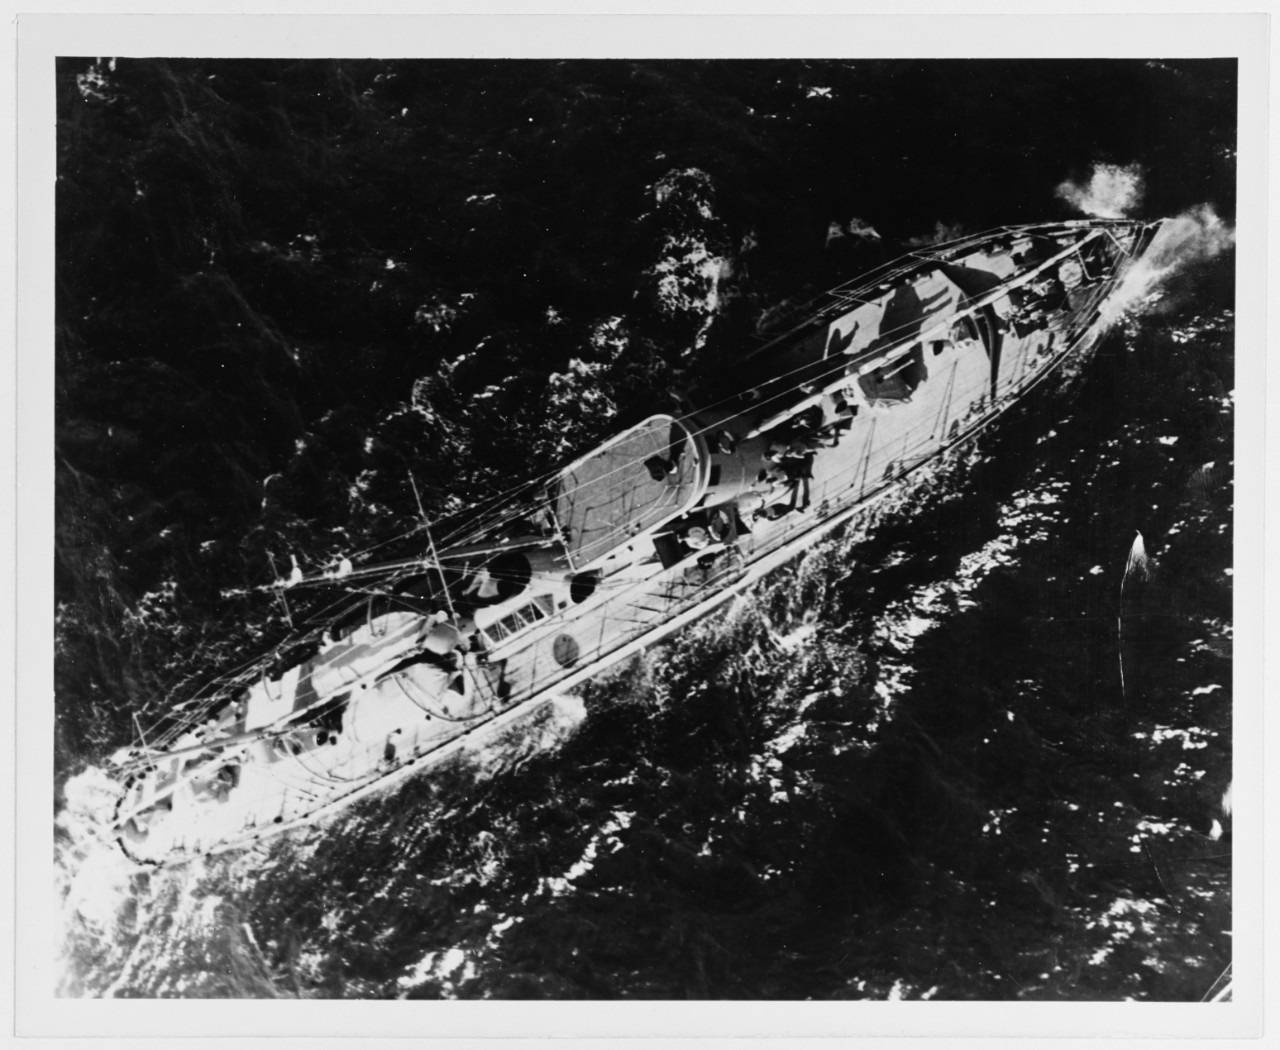 G-25 (Mexican patrol vessel, 1934-1956)